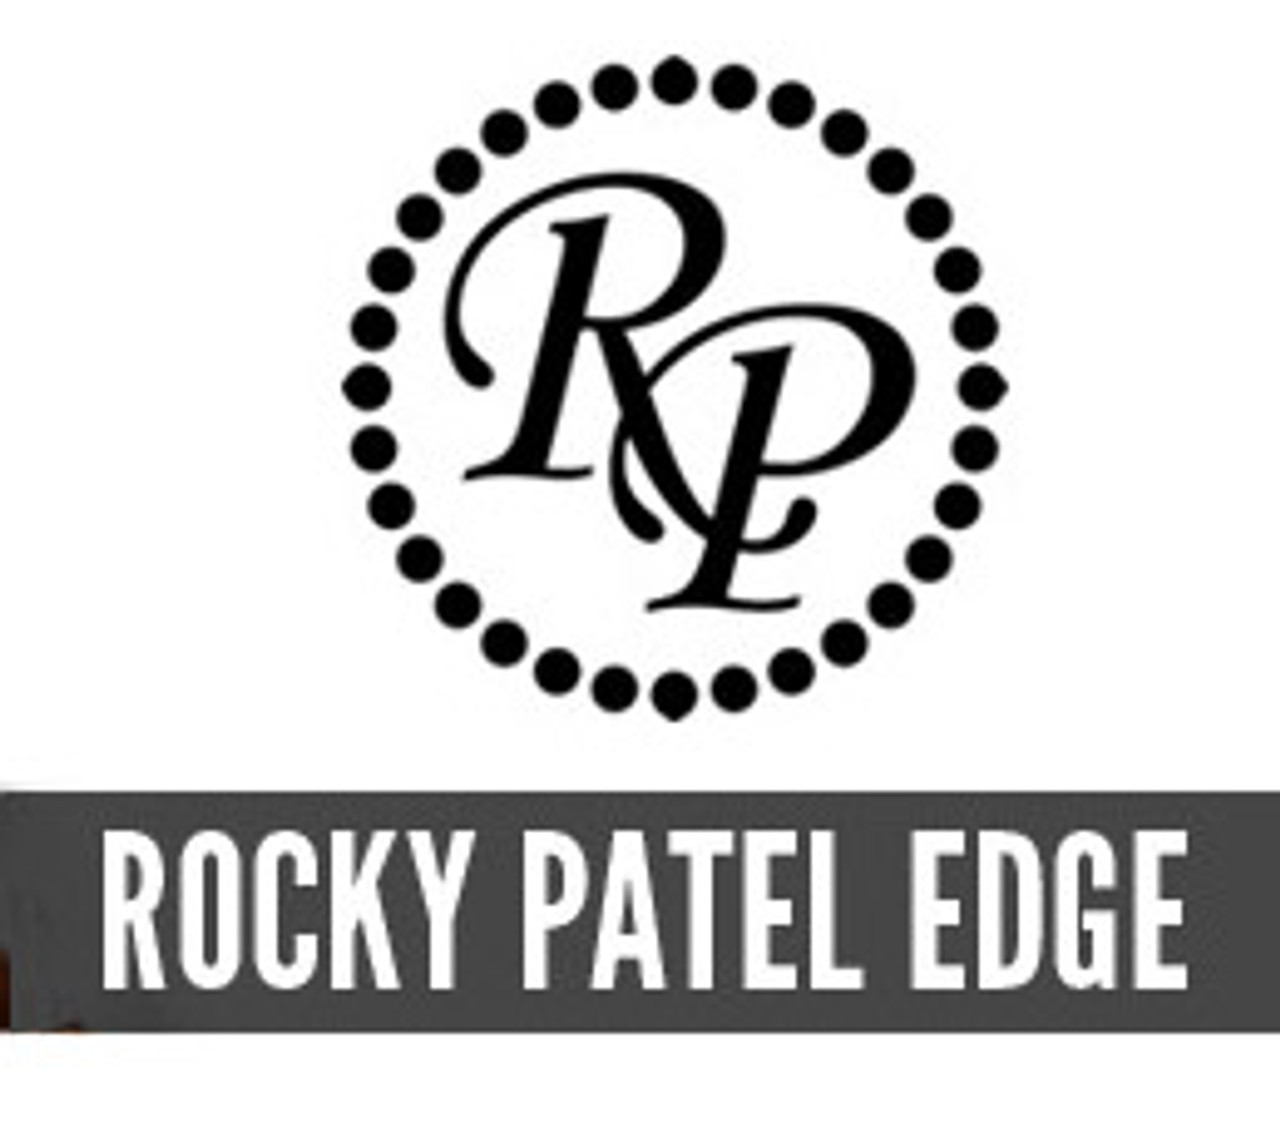 Rocky Patel The Edge Toro Cigars - 6 x 52 (Box of 20)